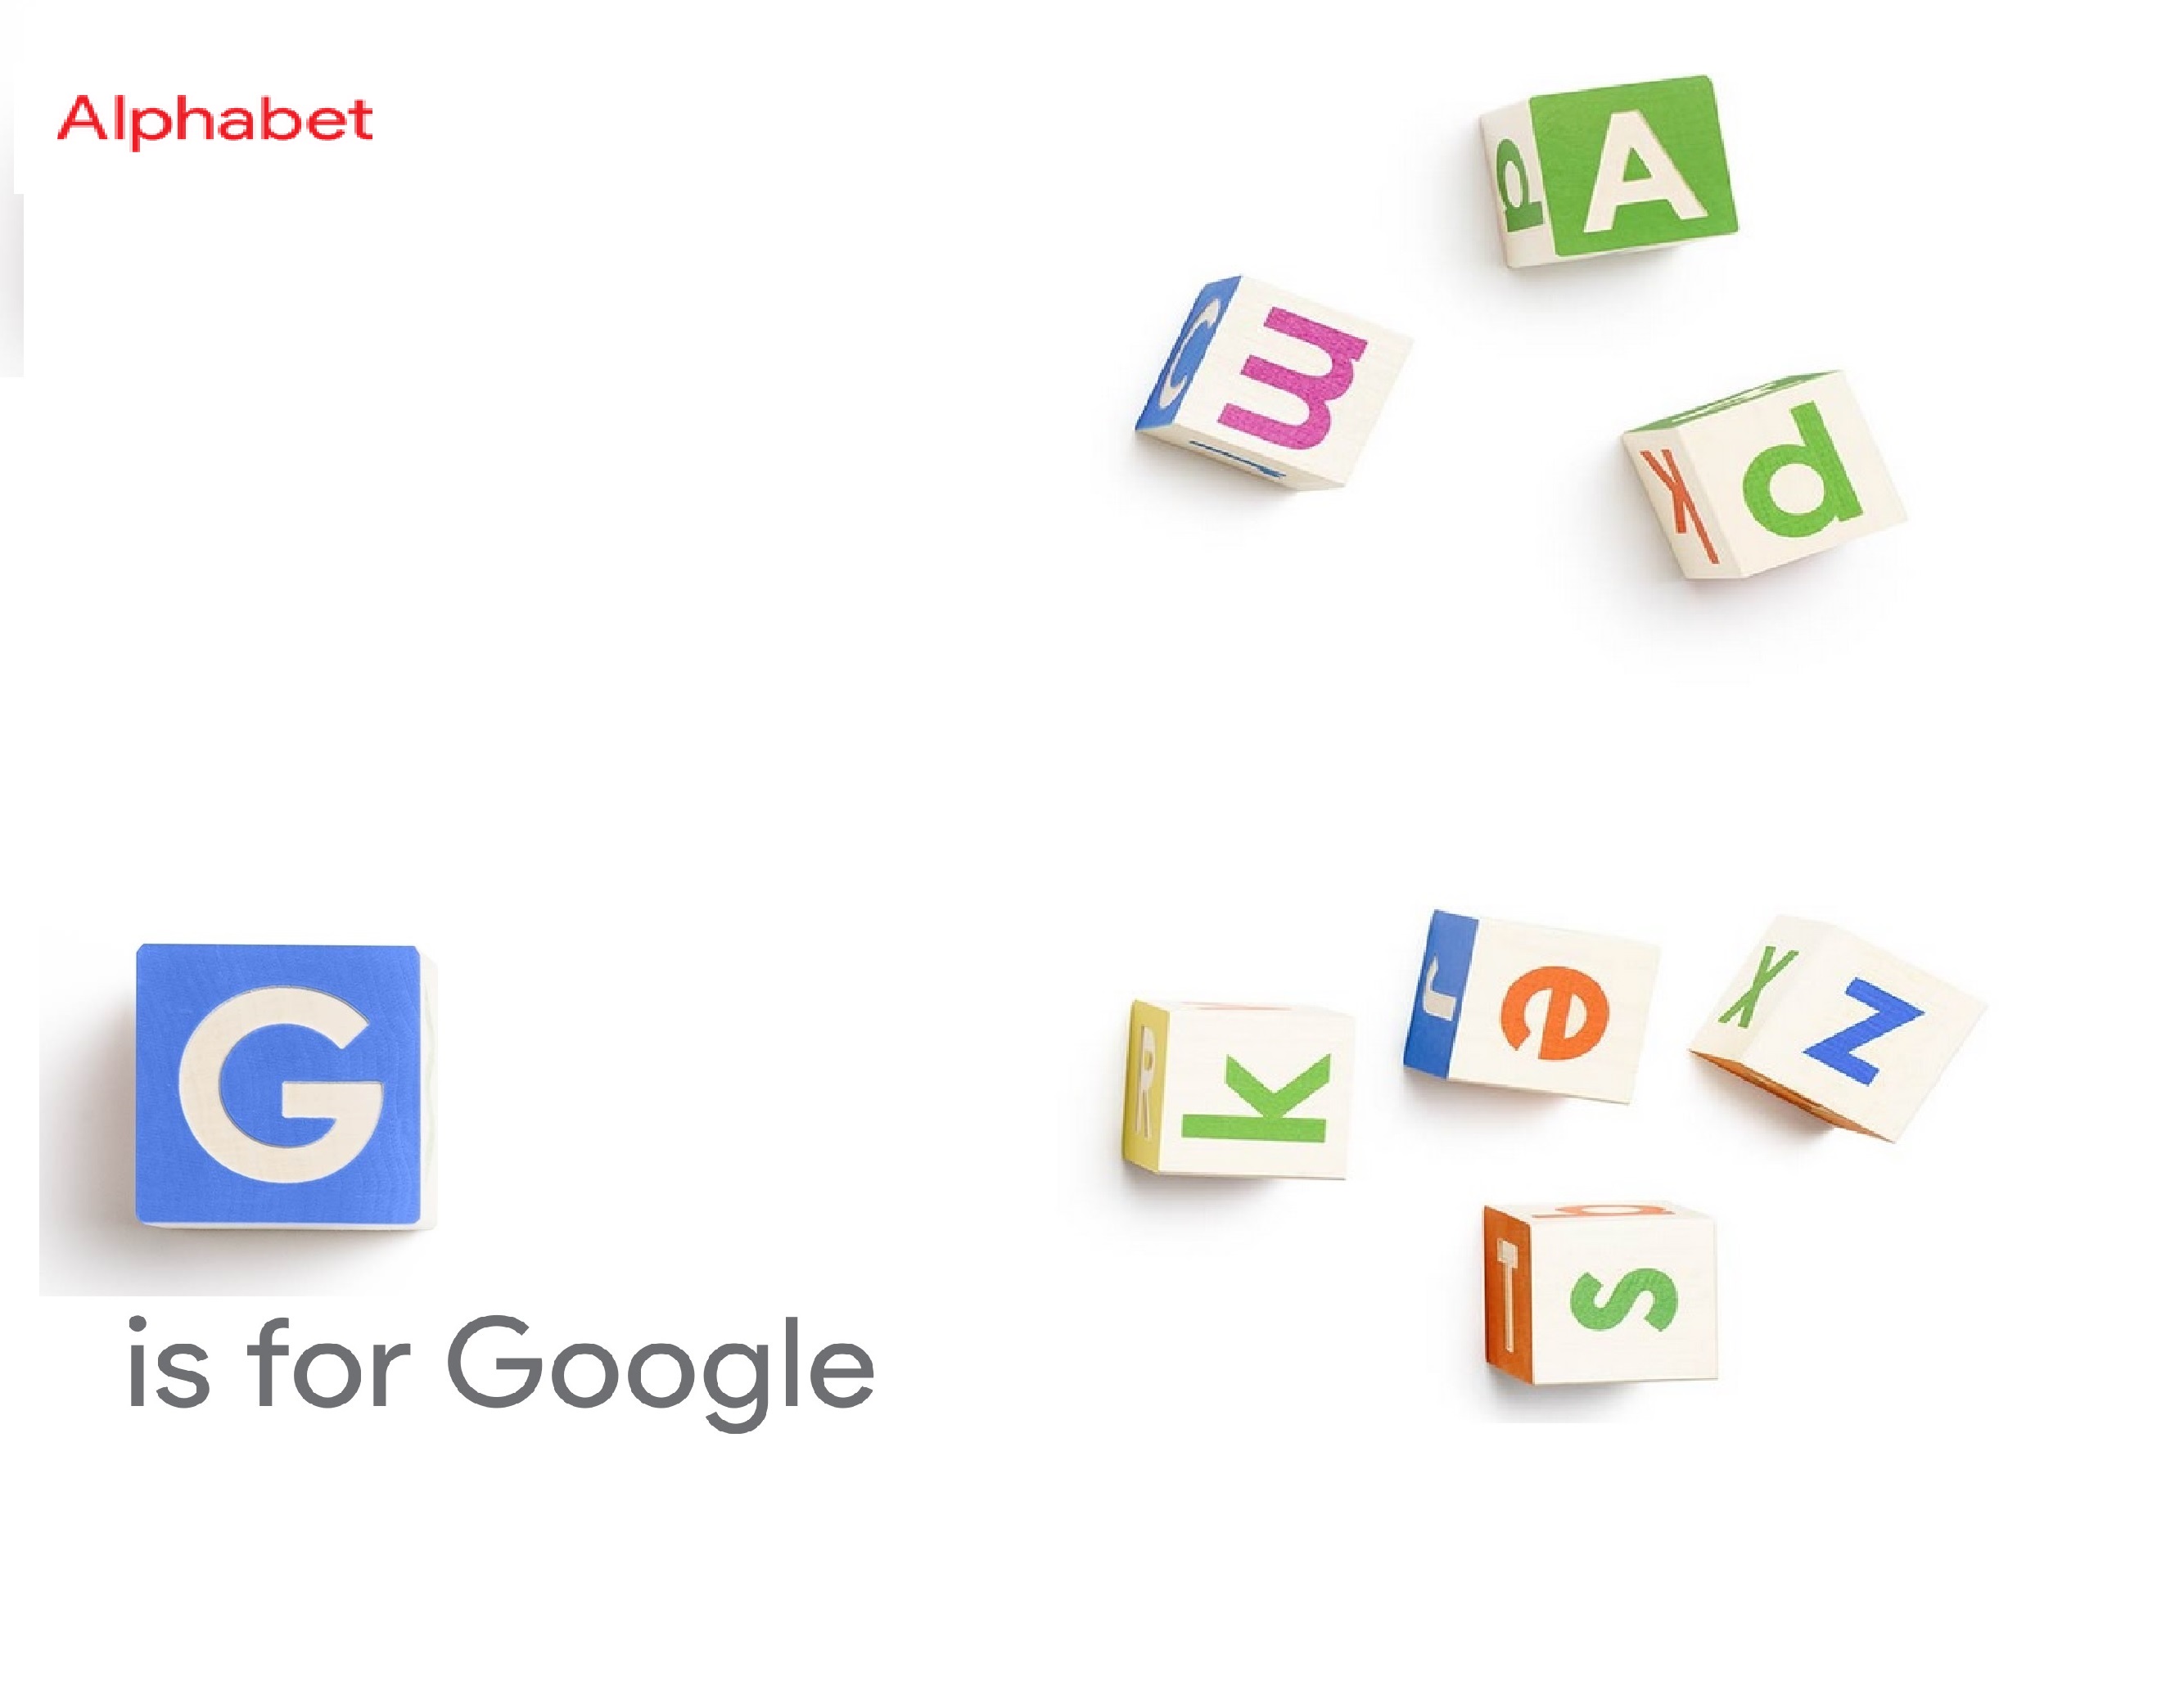 Google - Forms a new holding company, 'Alphabet' (https://abc.xyz ...